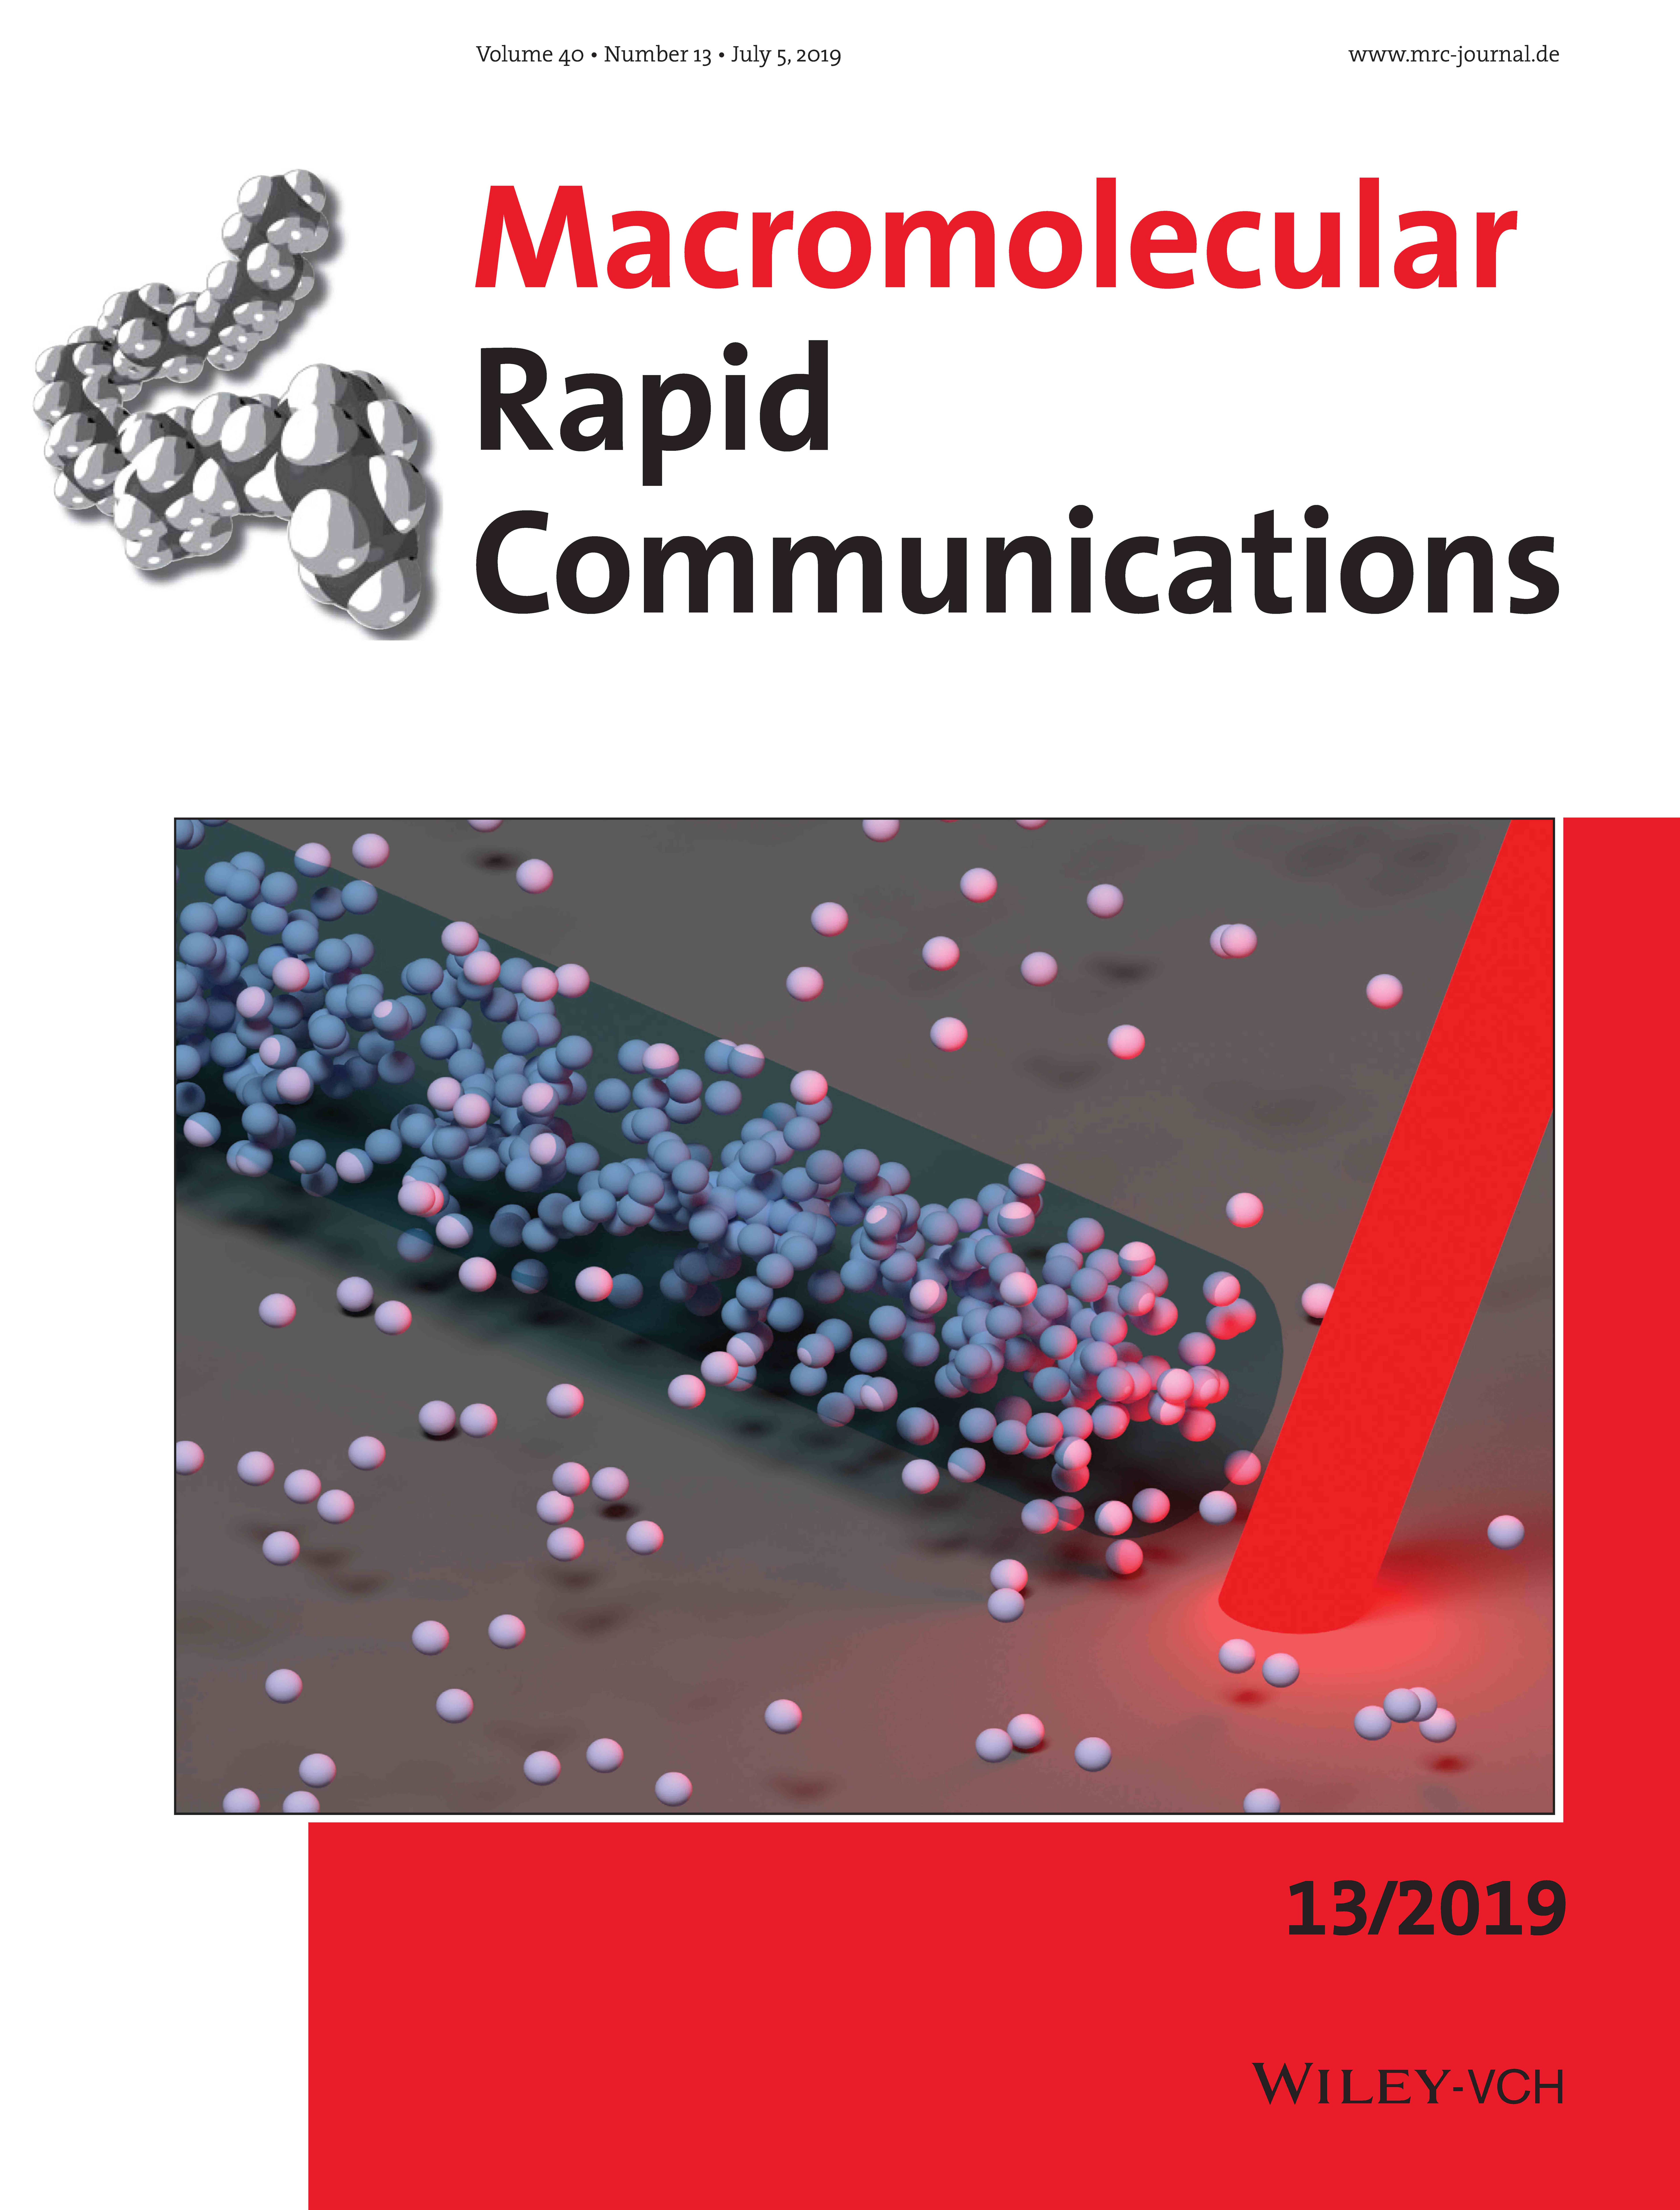 Cover of Macromolecular Rapid Communications Volume 40, Number 13, July 5, 2019